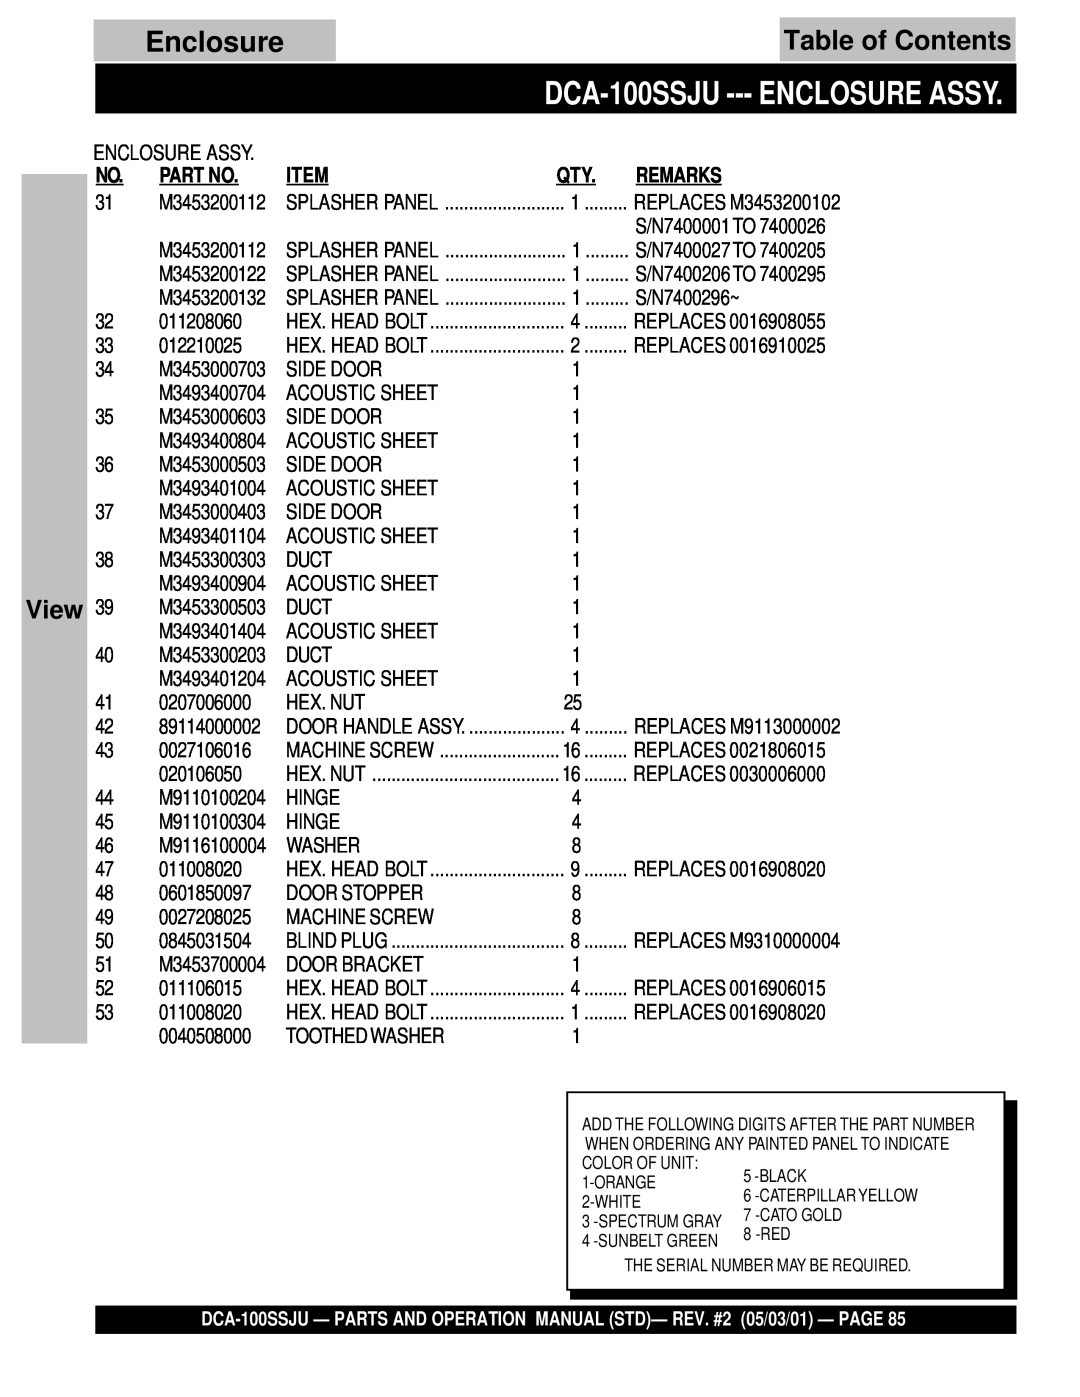 Multiquip DCA-100SSJU operation manual Table of Contents, Enclosure Assy, View 